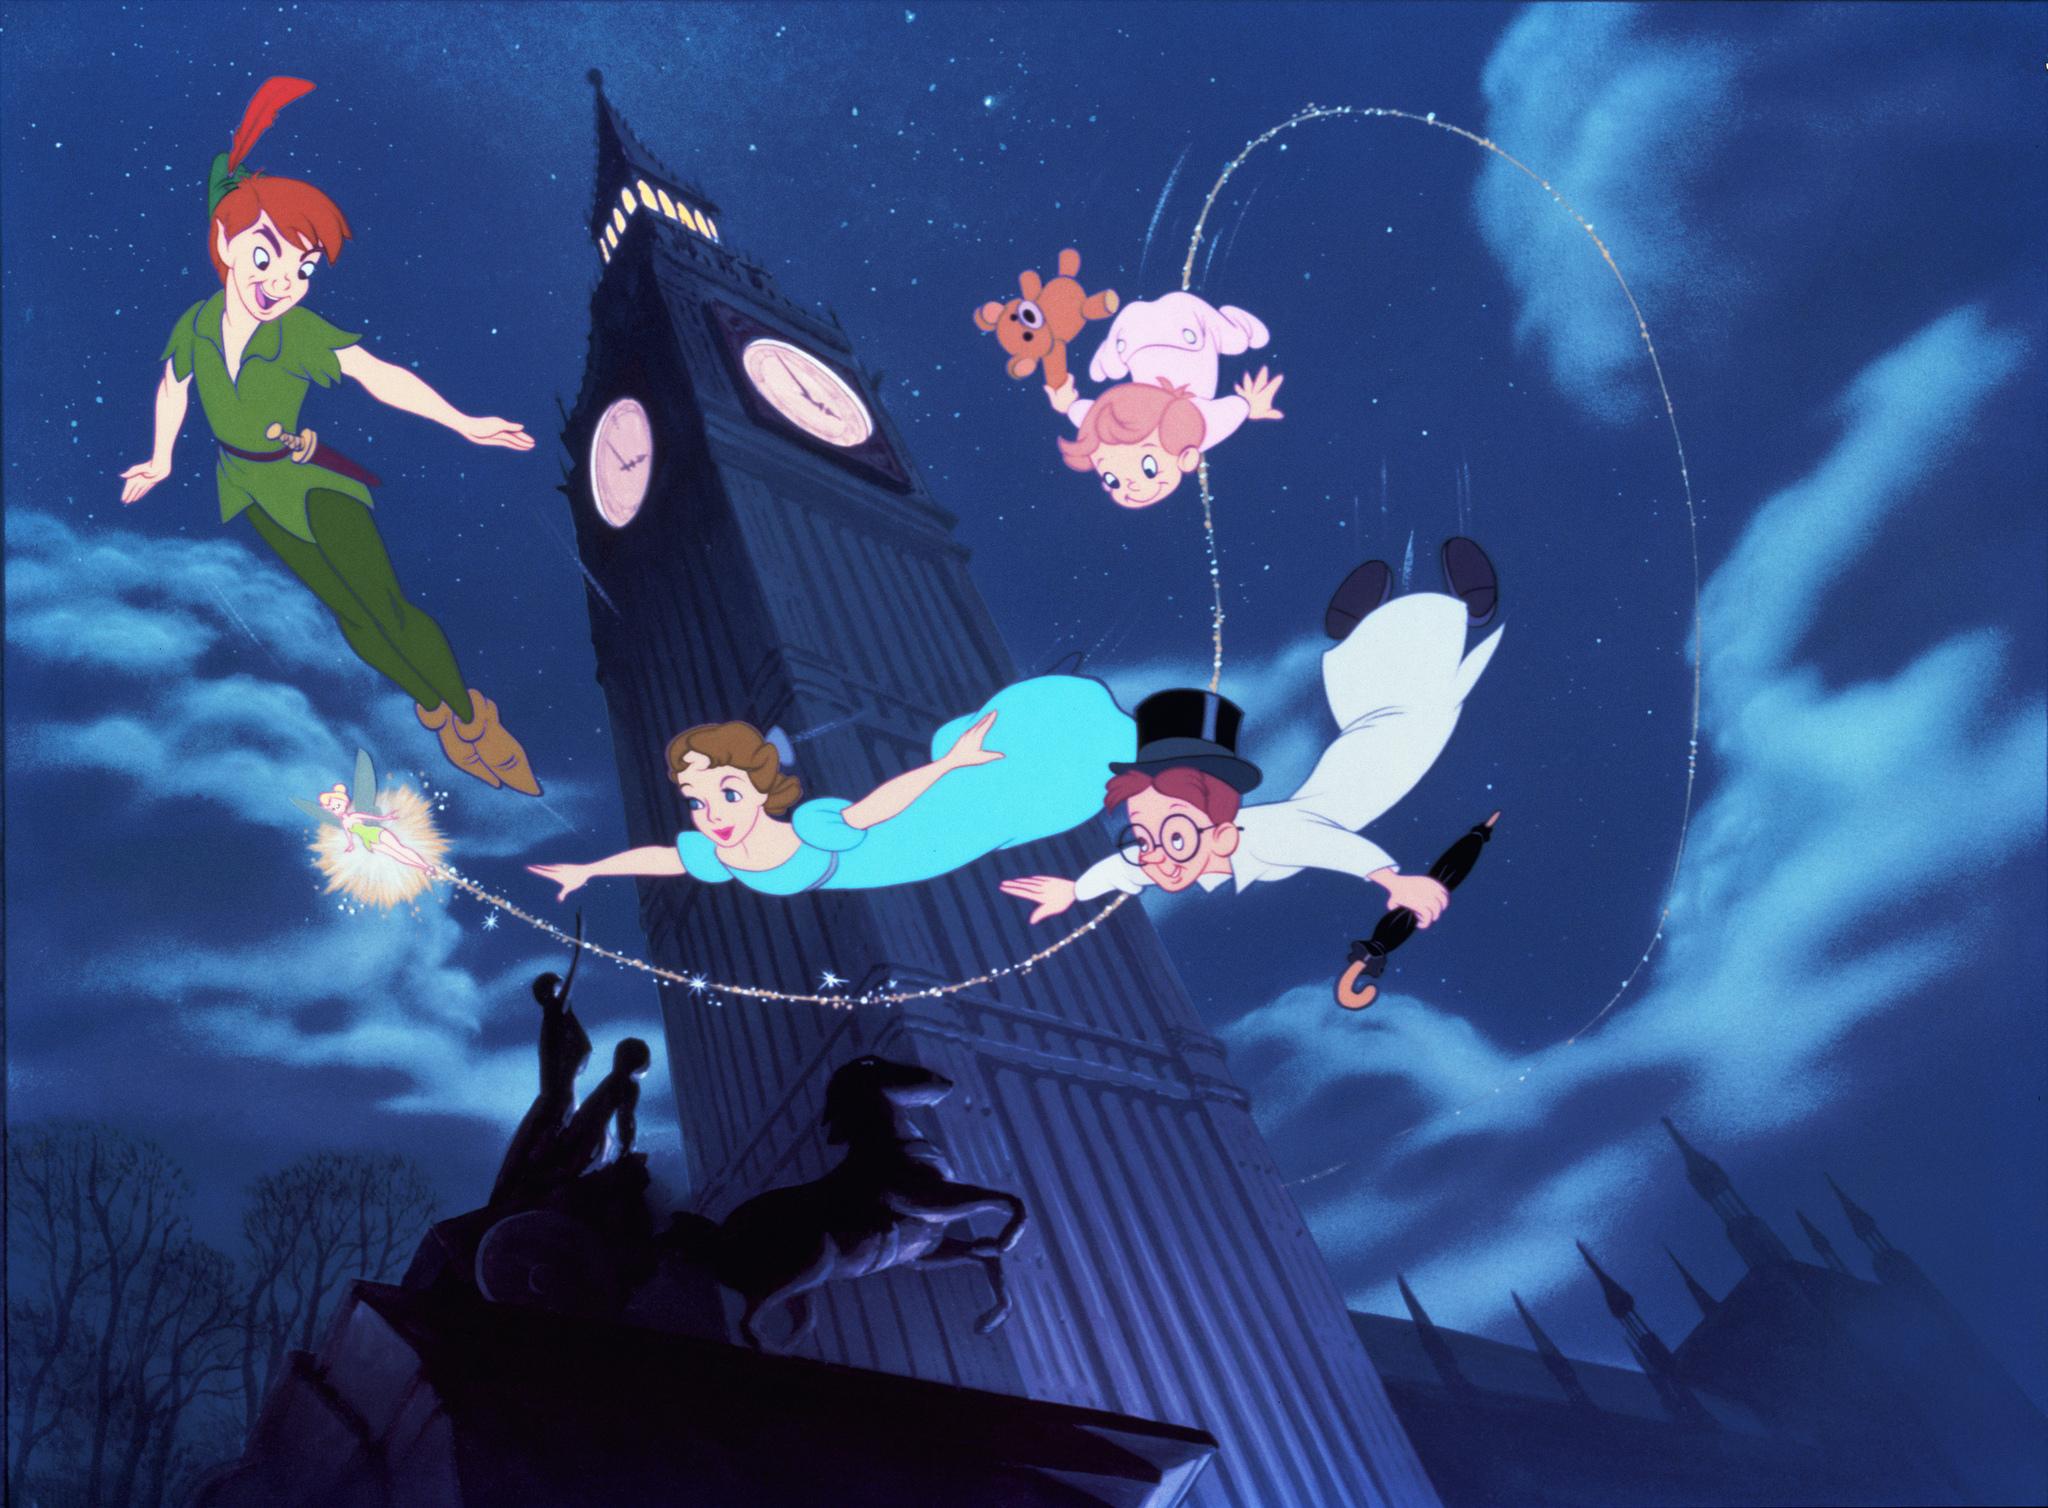 Peter Pan: Walt Disney Signature Collection – Home Entertainment Review by DC Sarah